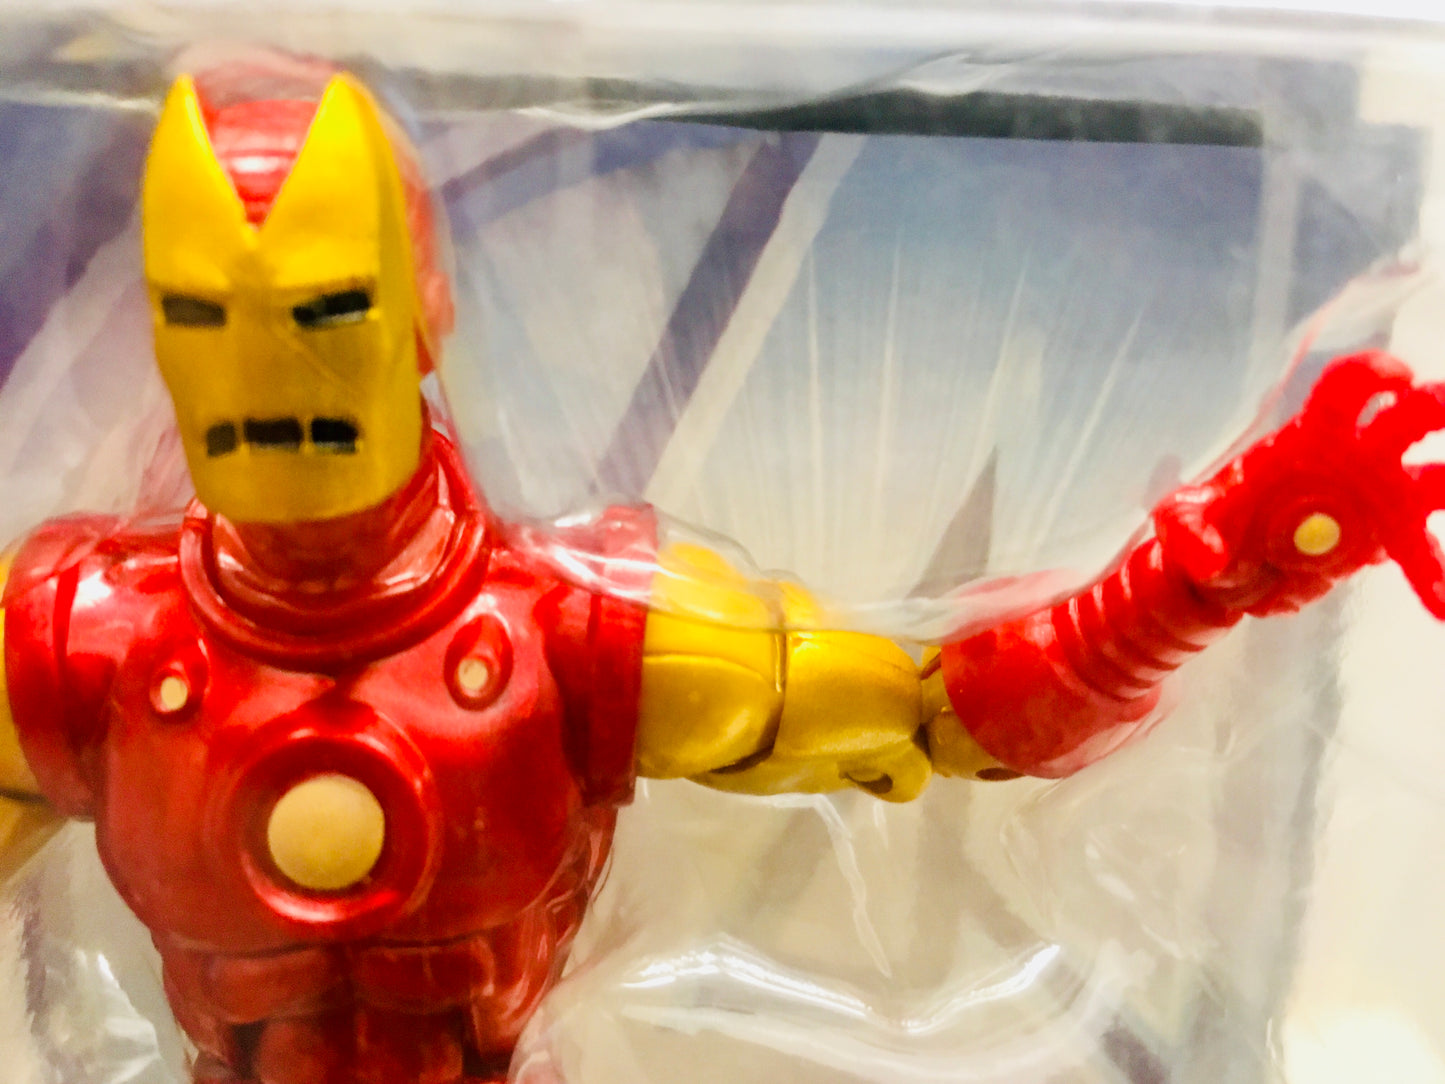 Hasbro Marvel Legends Classic Iron Man